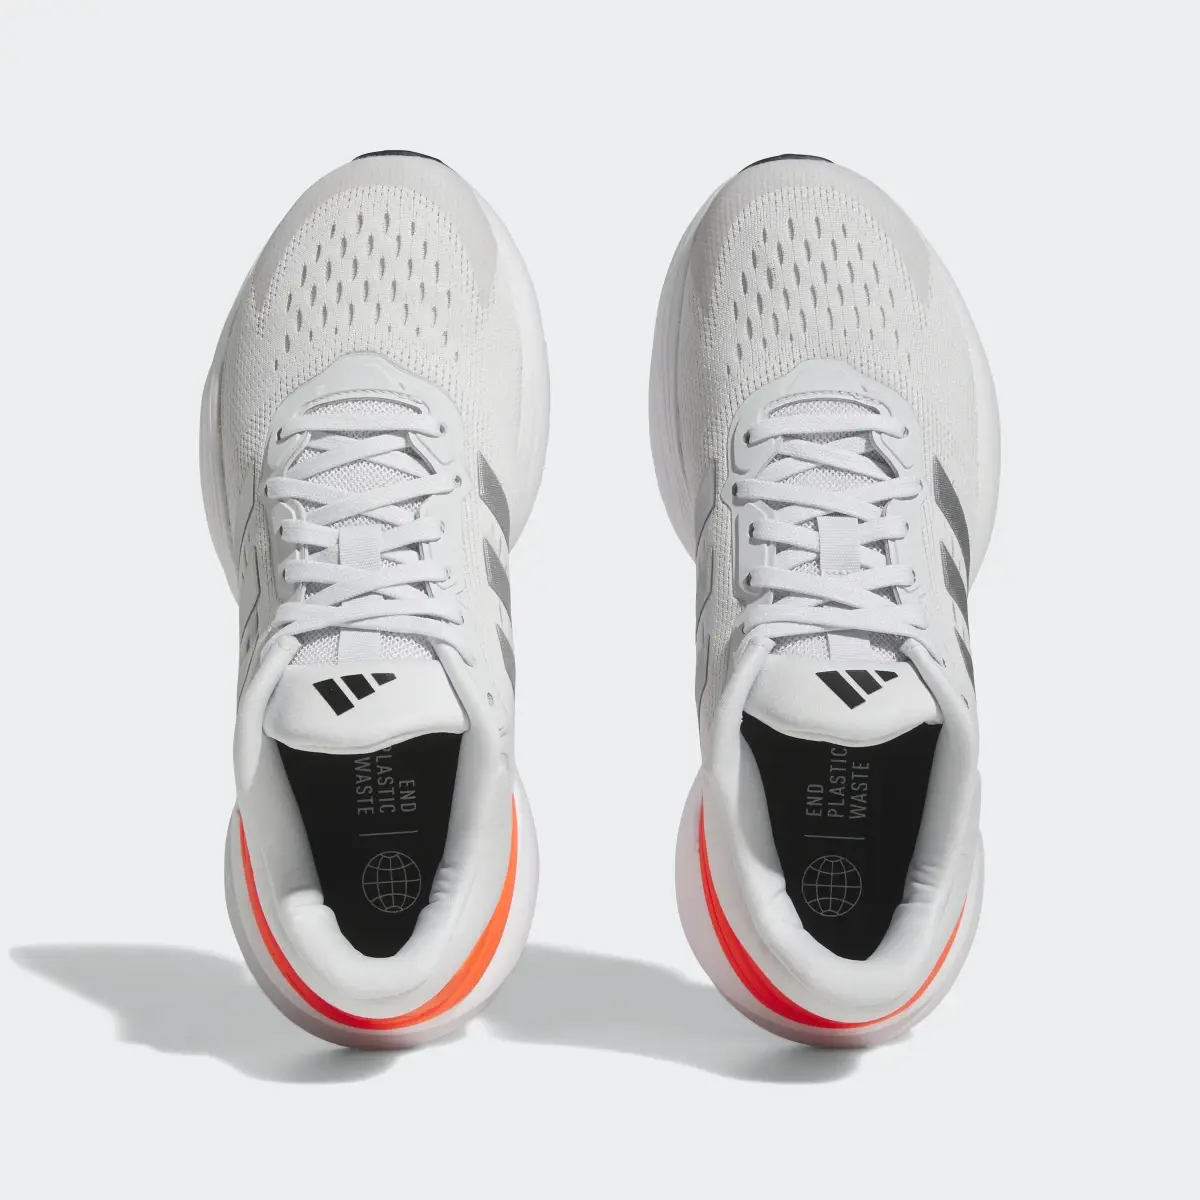 Adidas Response Super 3.0 Shoes. 3